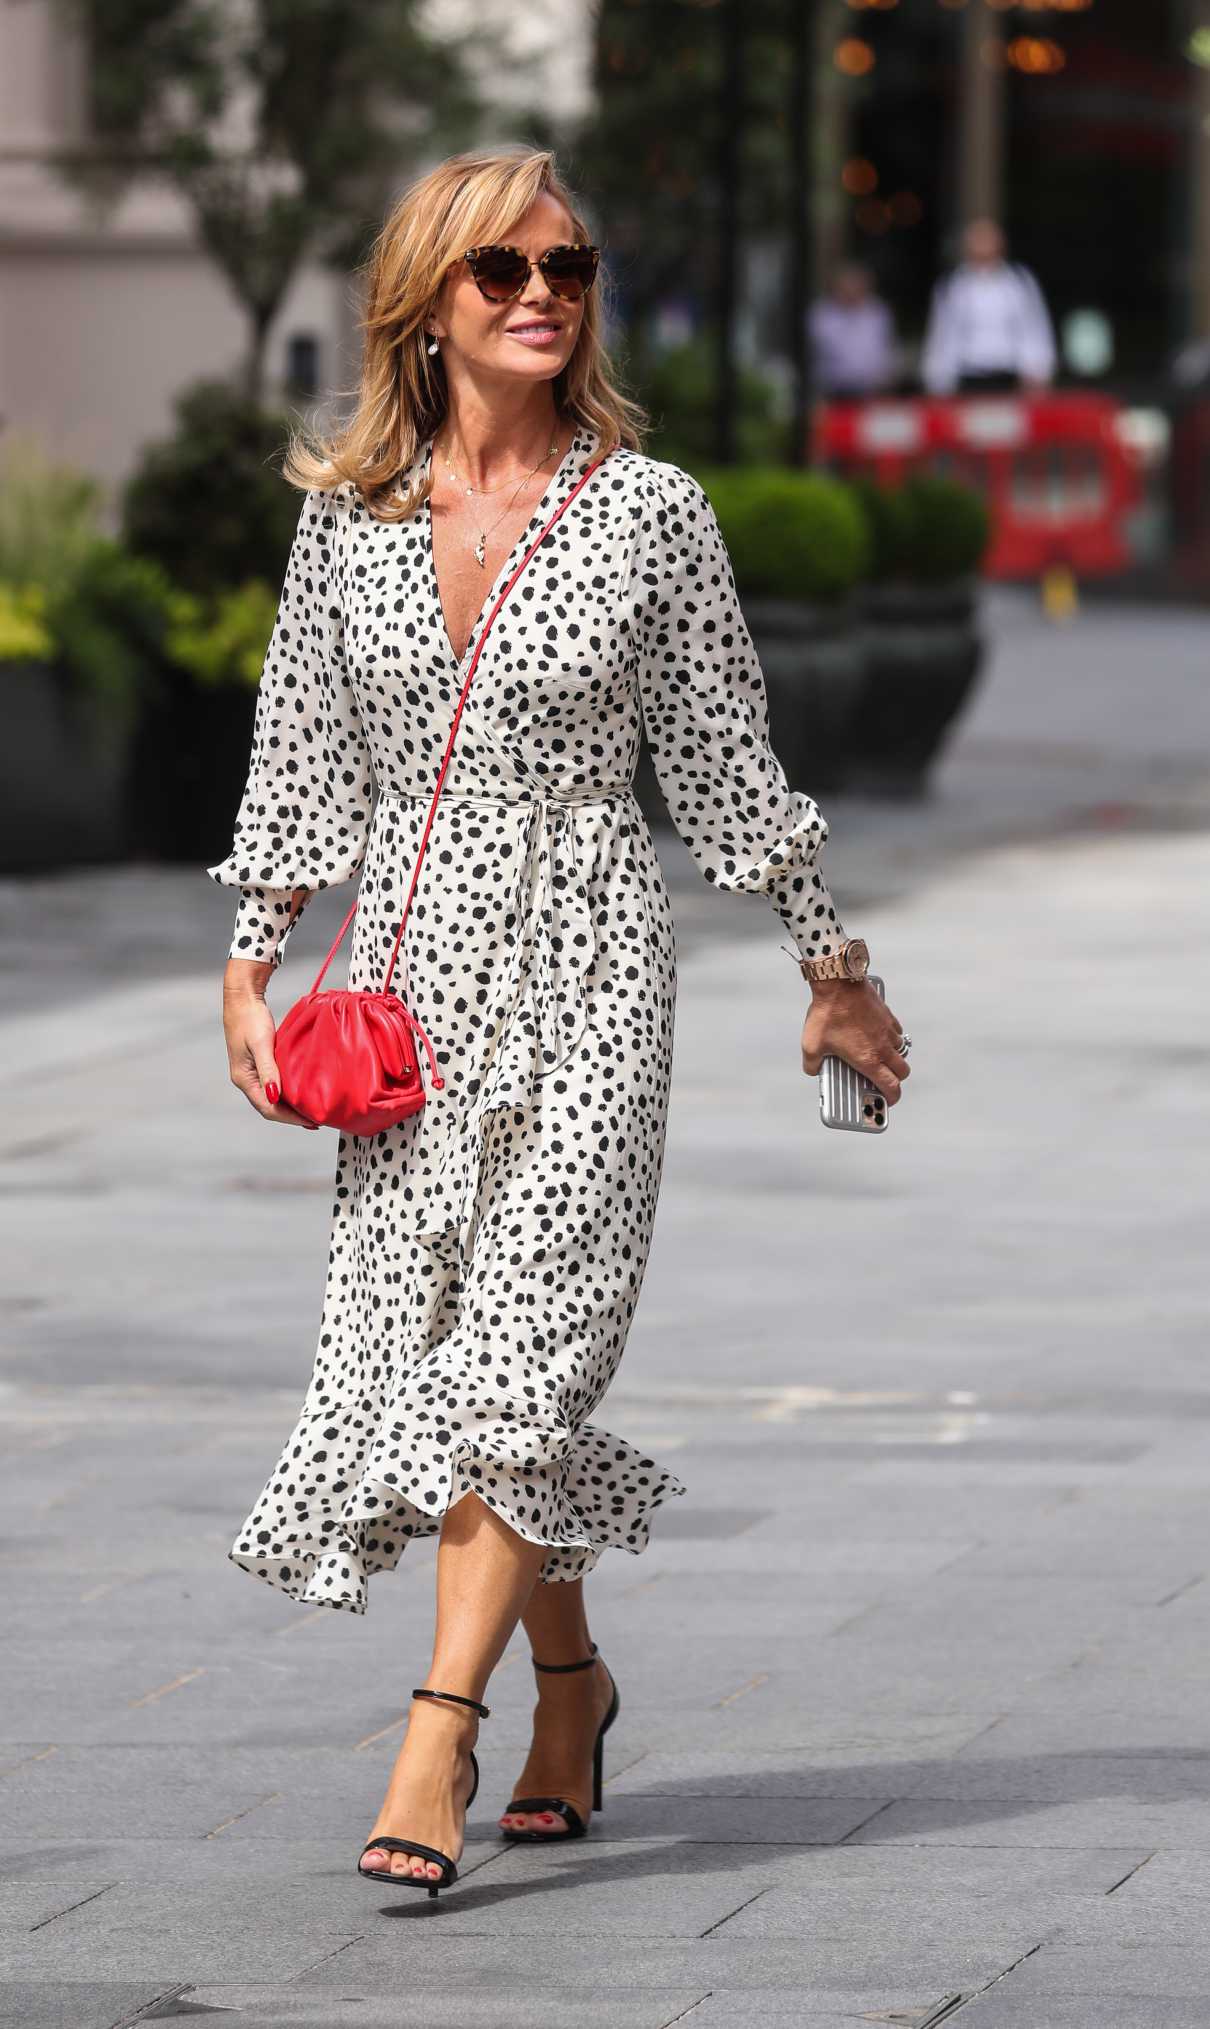 Amanda Holden in a Polka Dot Dress Leaves the Heart Radio in London 07 ...